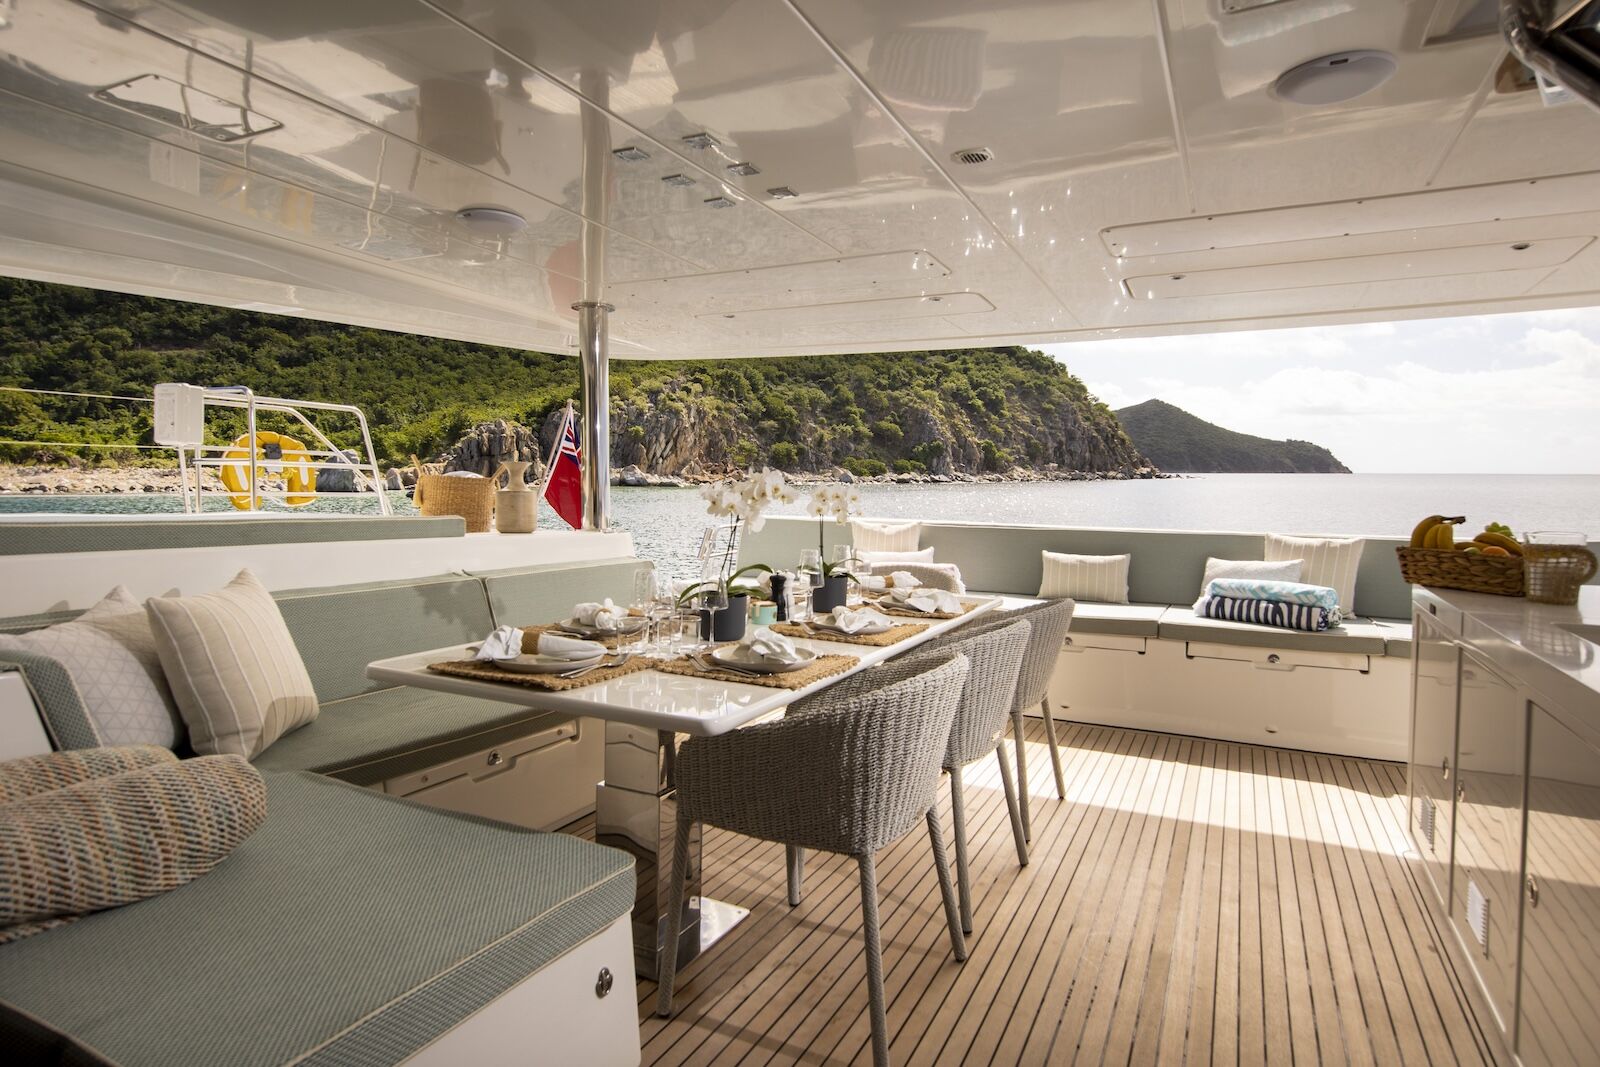 salon on the catamaran with nomada at sea